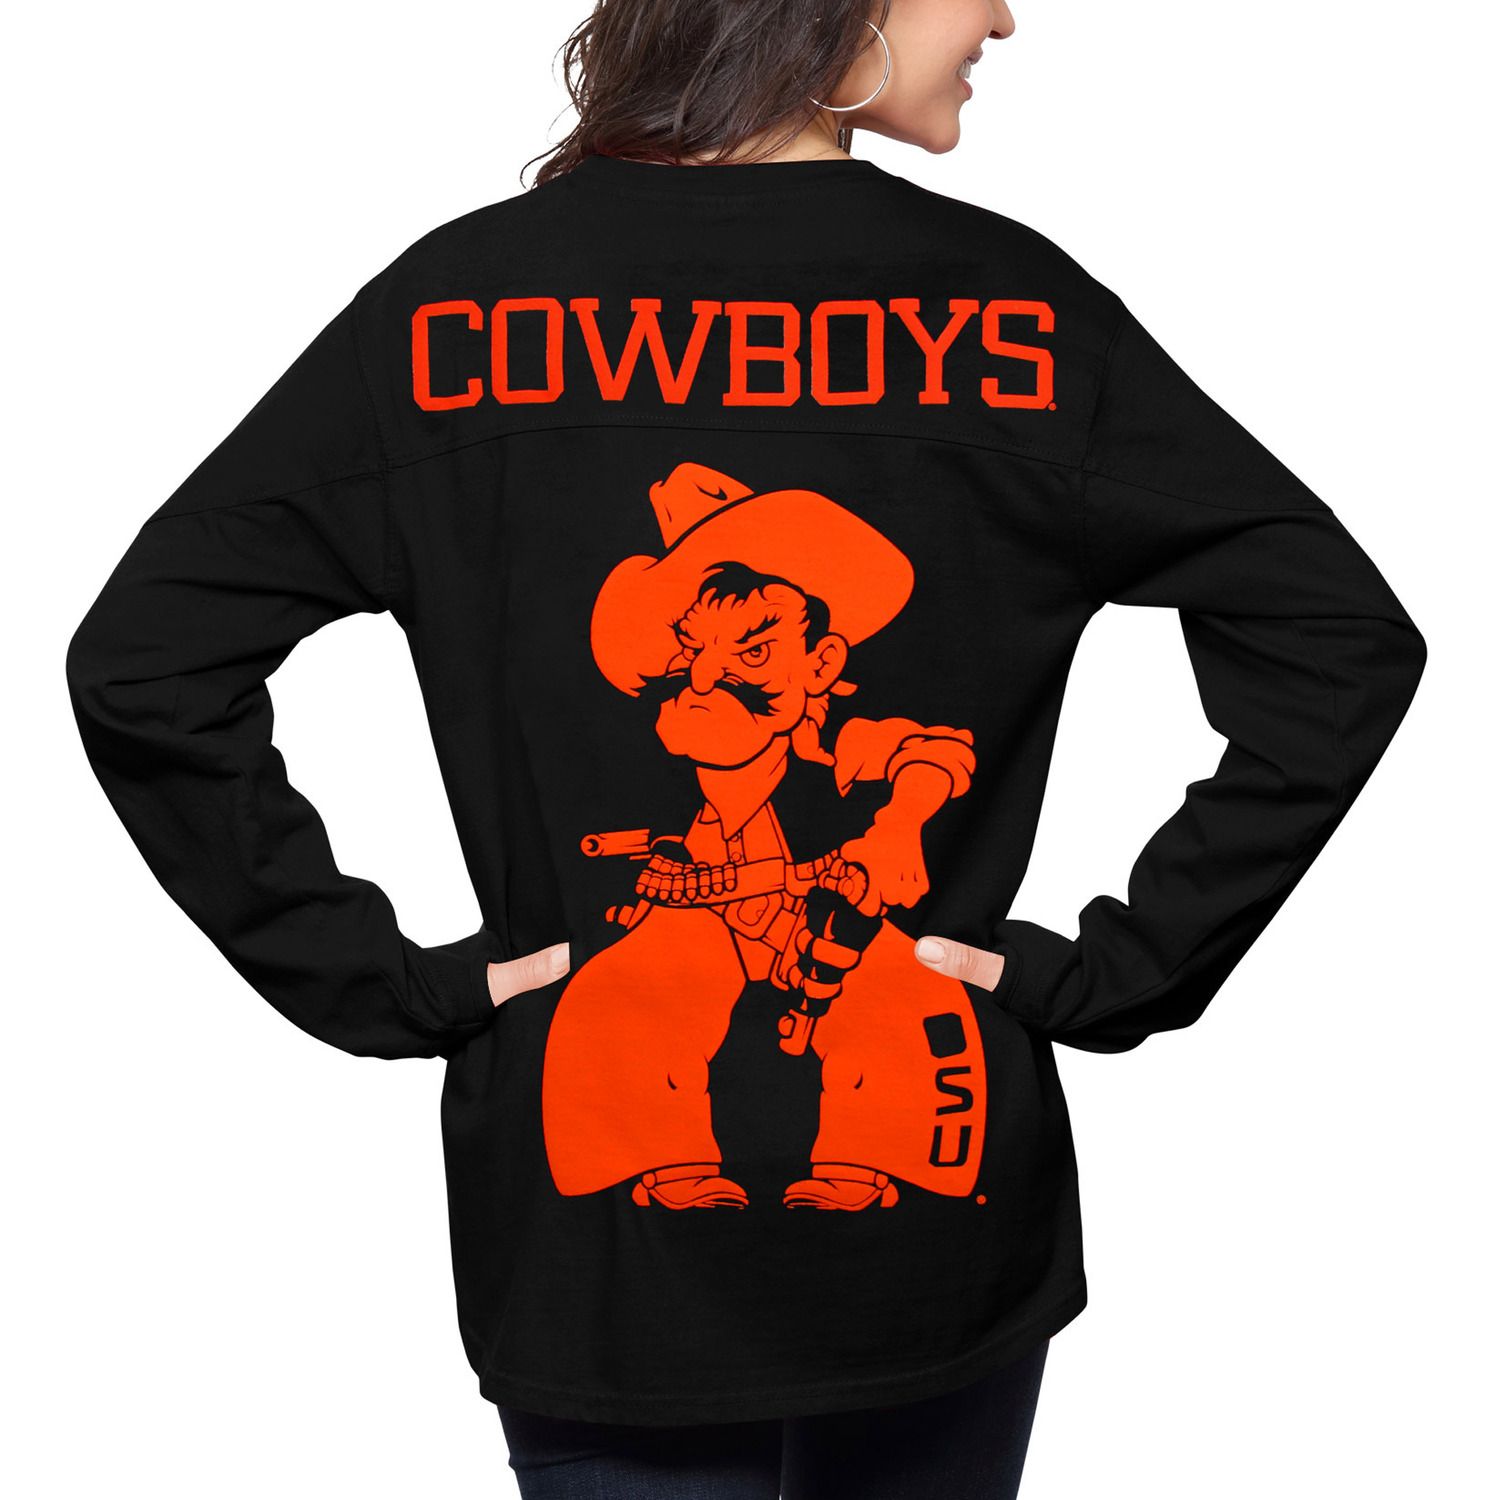 oklahoma state cowboys shirt